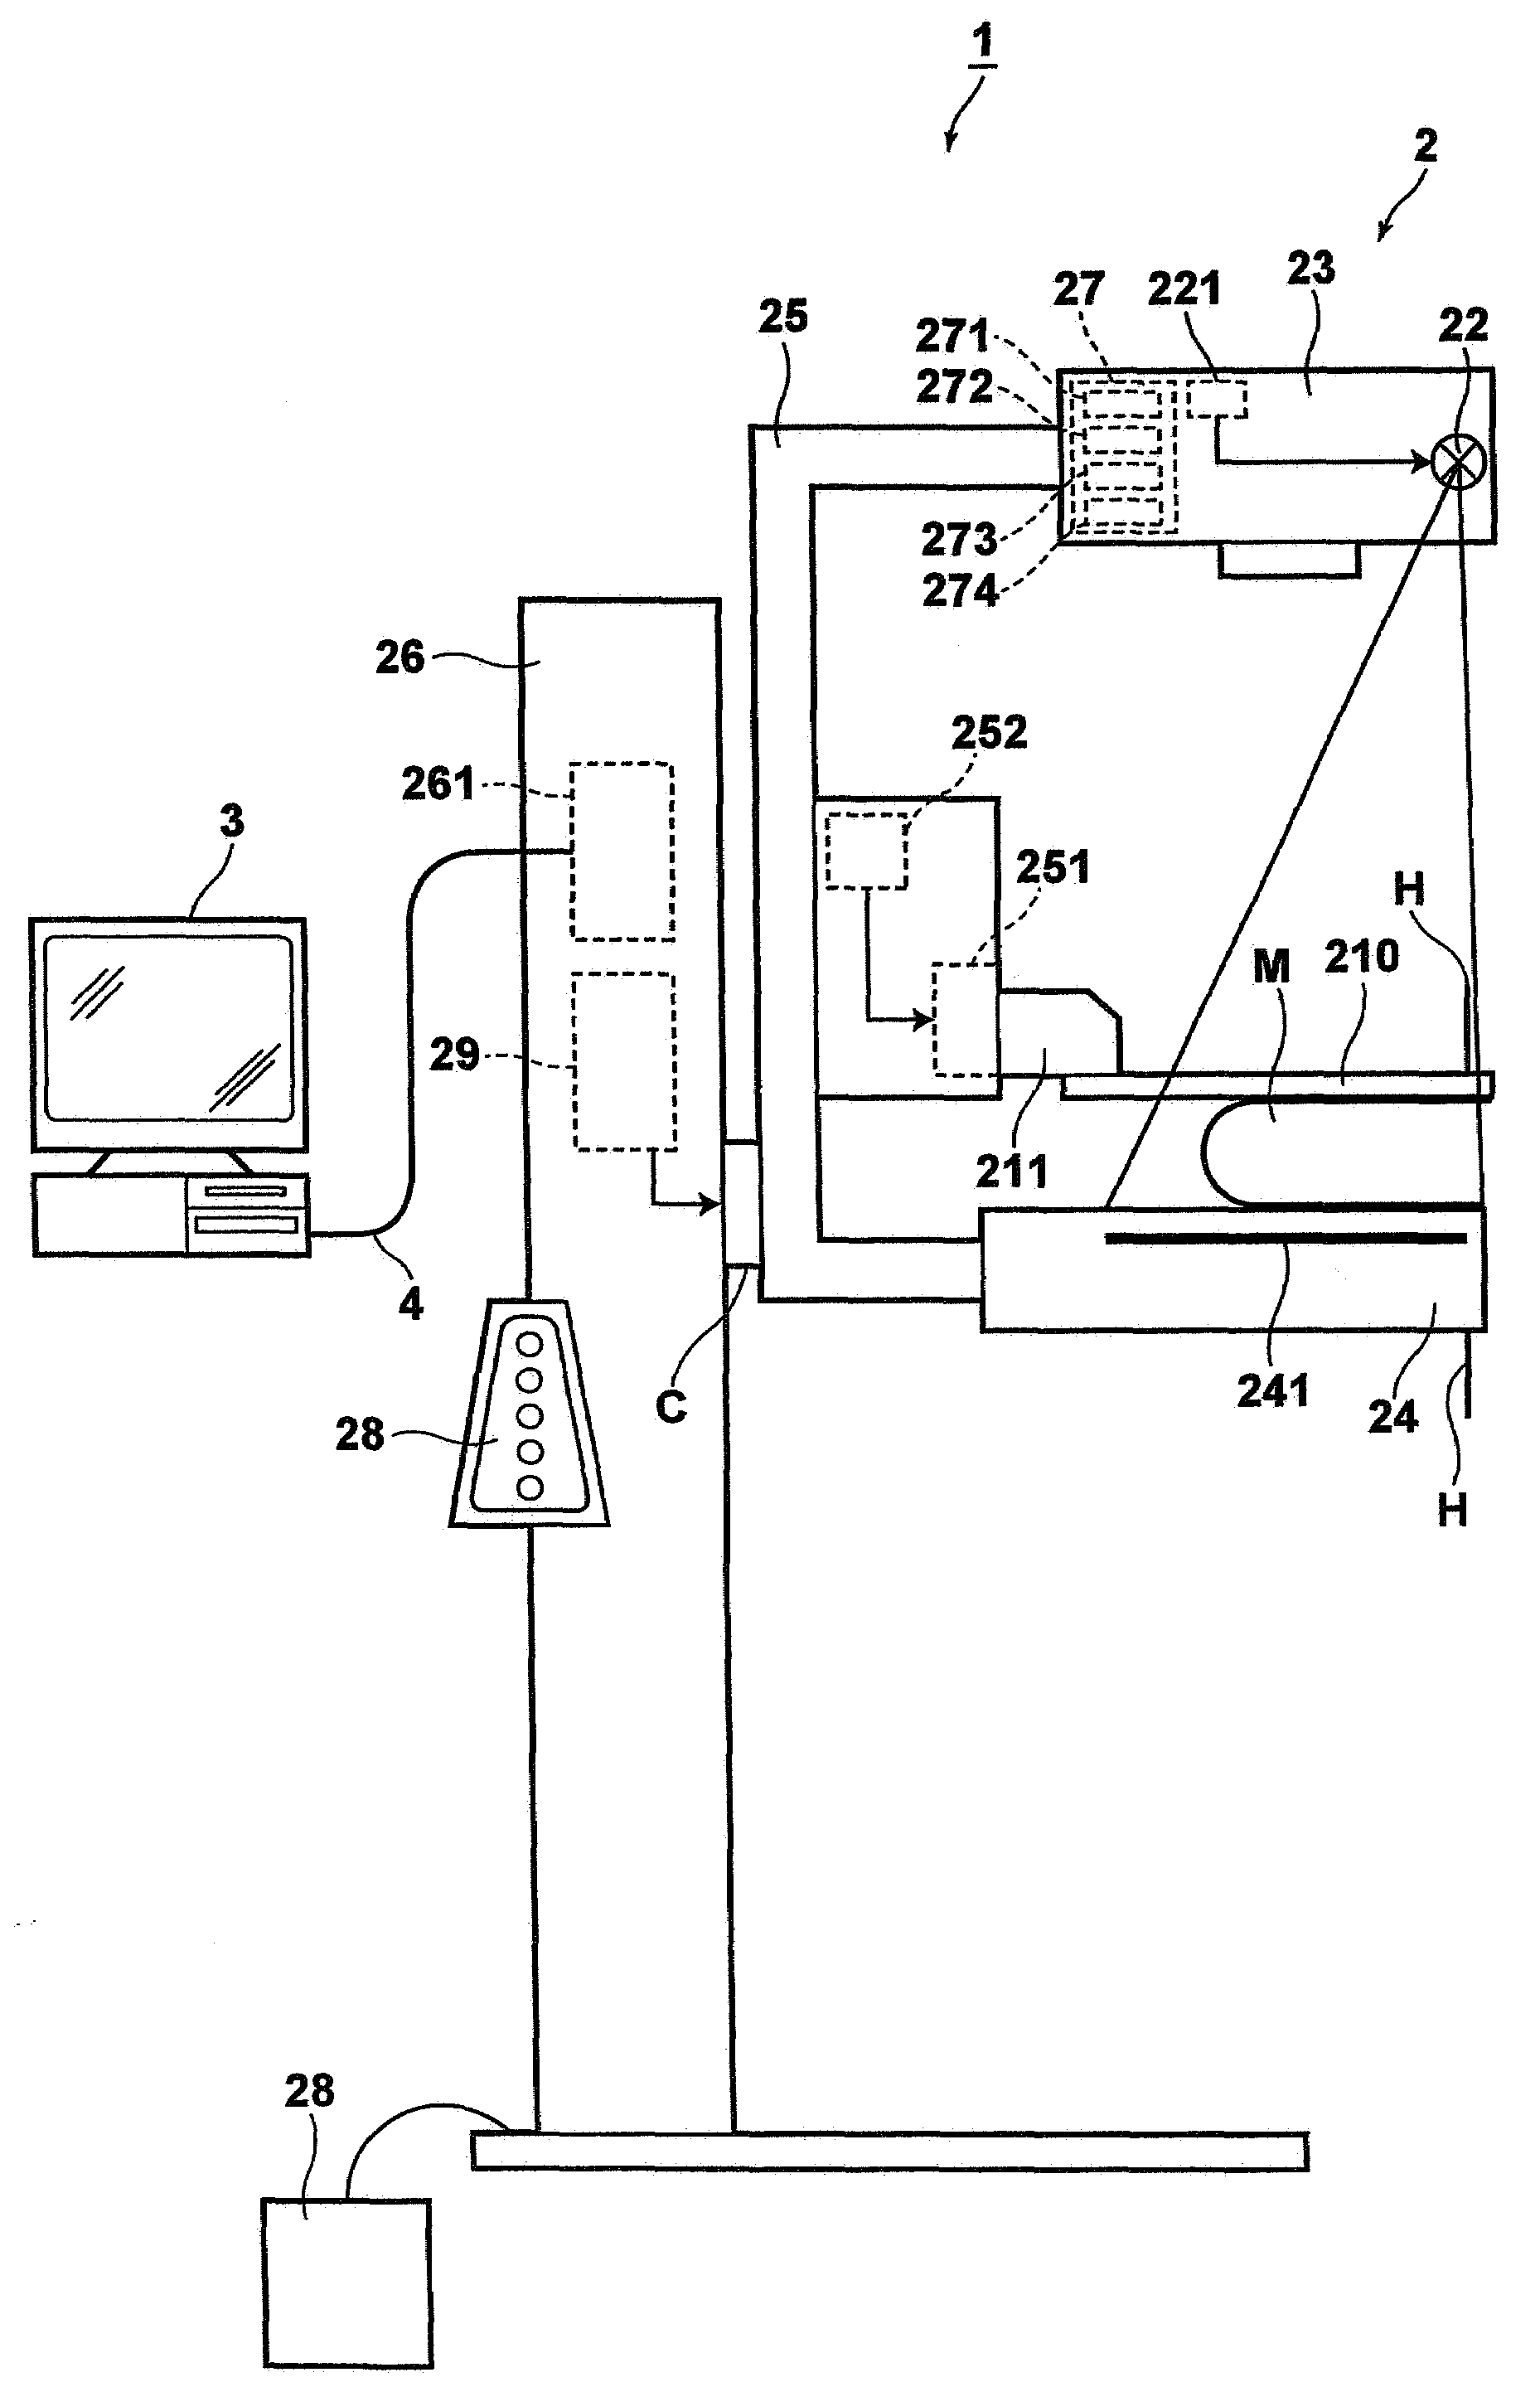 Tomographic image obtainment apparatus and method